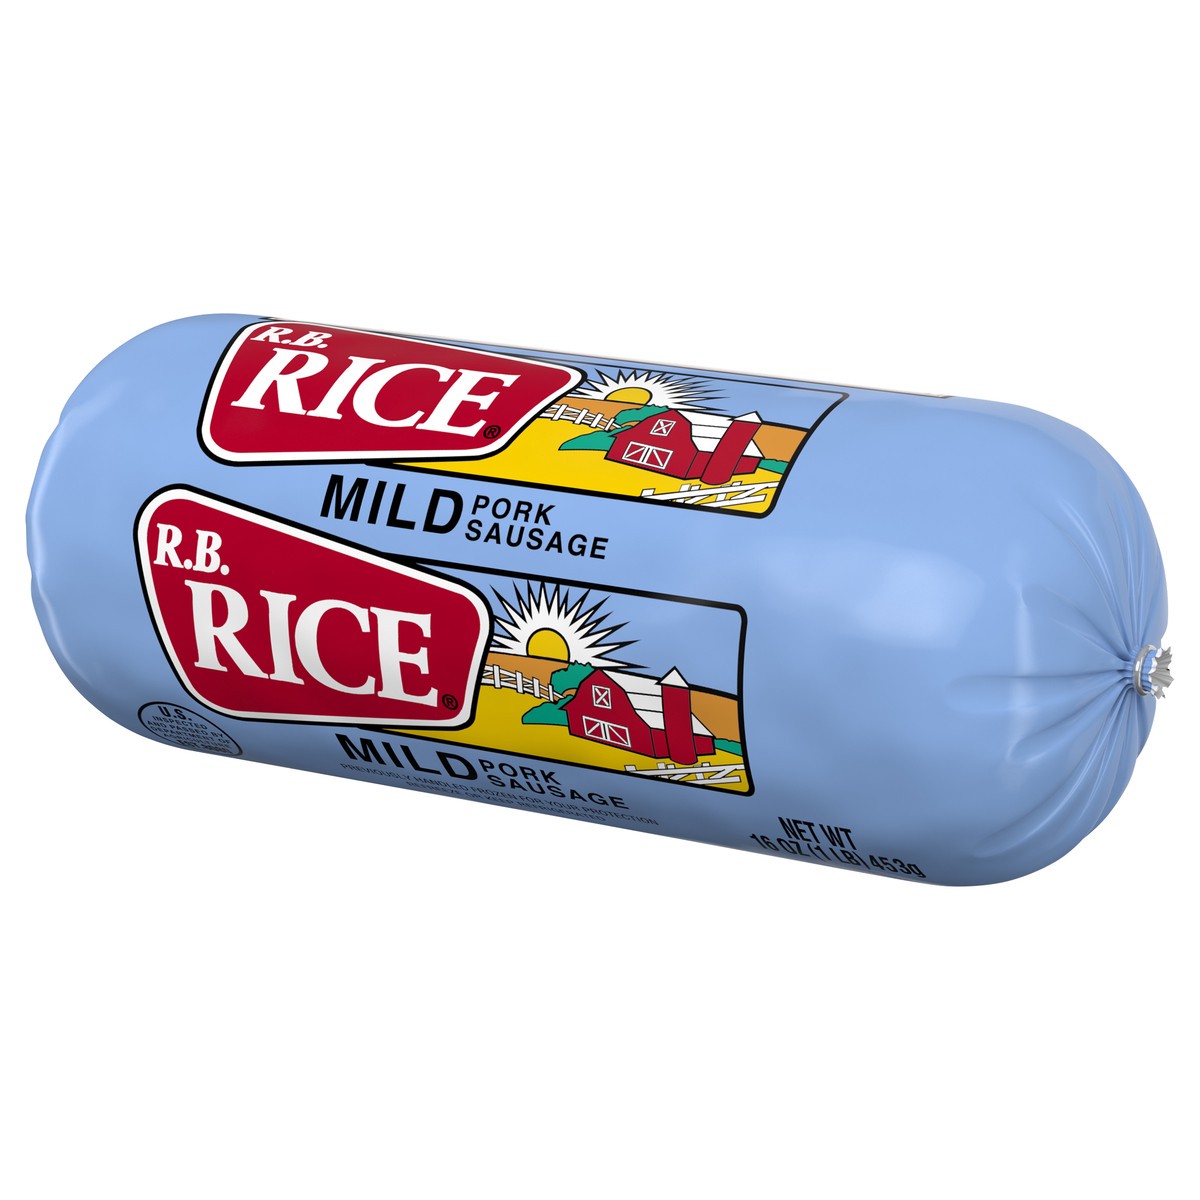 slide 7 of 8, RB RICE R.B. Rice Mild Pork Sausage Roll, 16 oz., 453.59 g